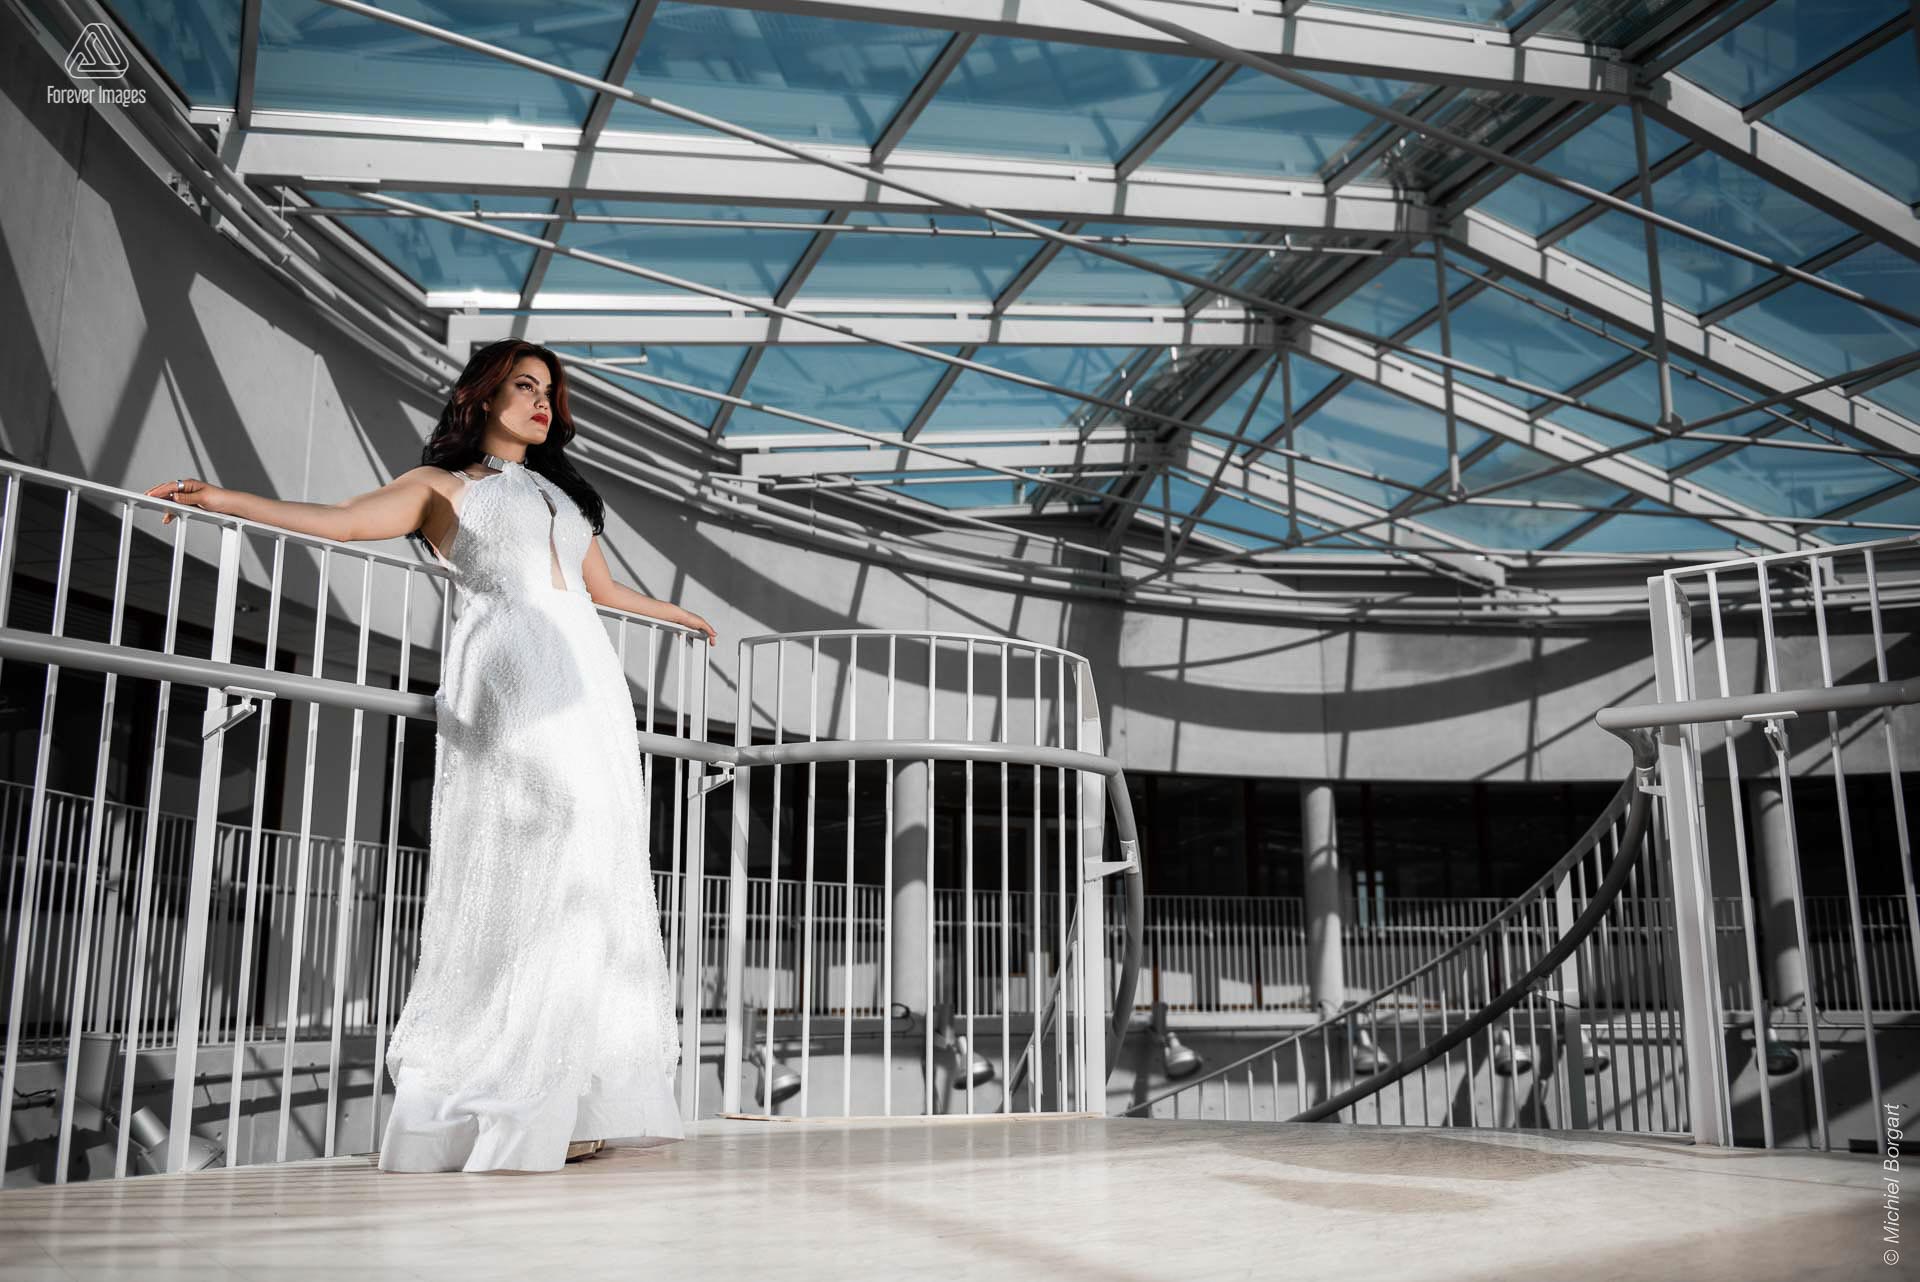 Fashion photo glamor beautiful lady glass ceiling white dress | Daphna Akkermans David Cardenas | Fashion Photographer Michiel Borgart - Forever Images.